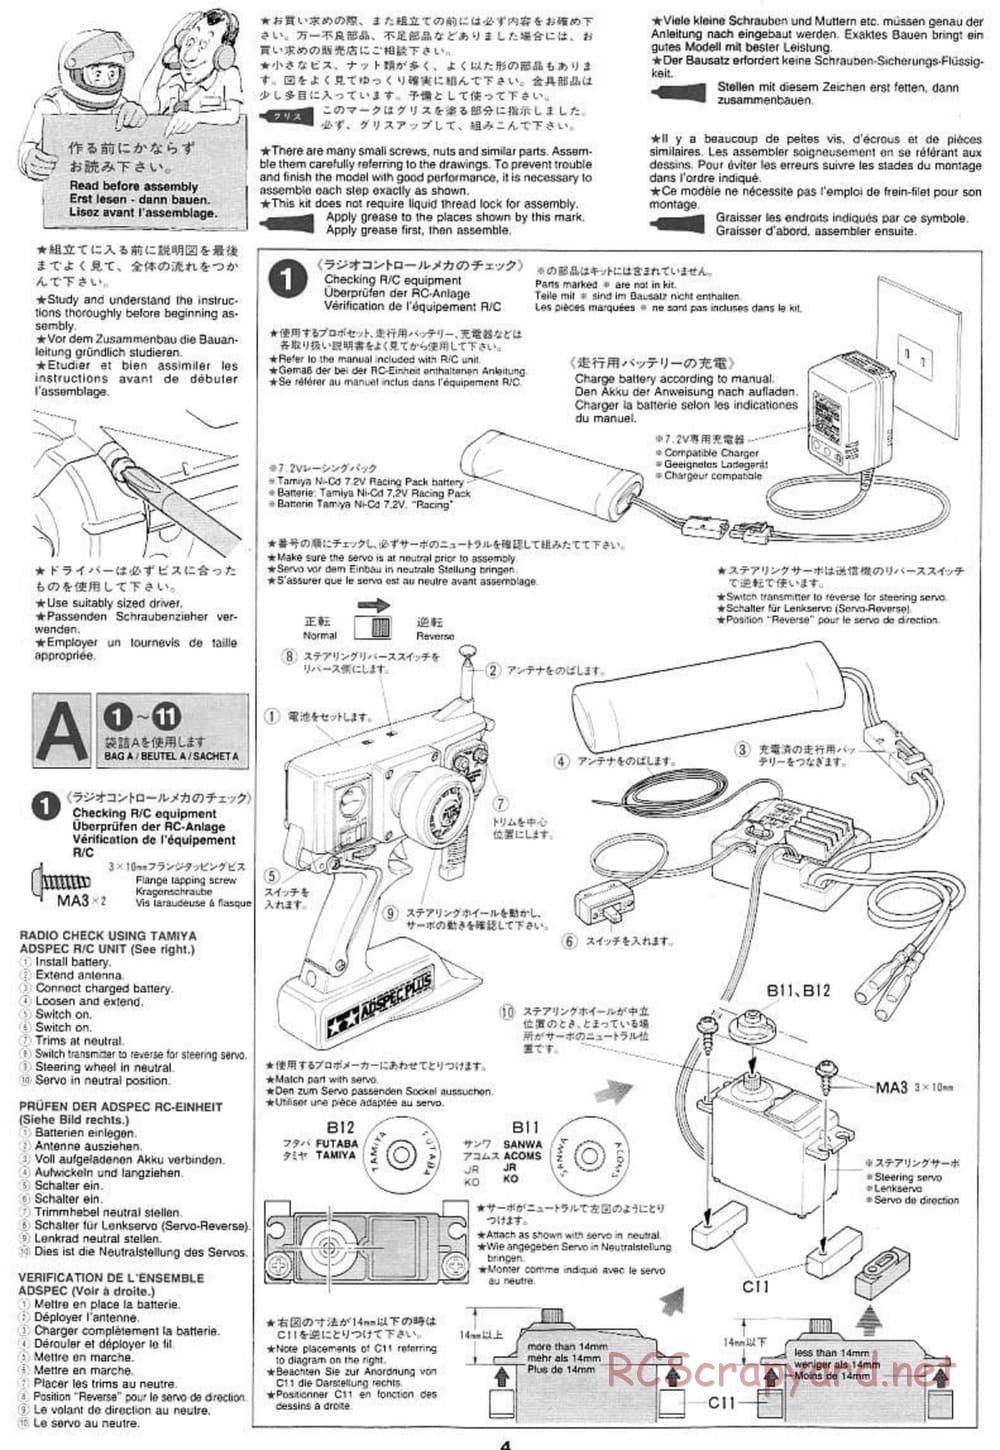 Tamiya - Ford Escort WRC - TL-01 Chassis - Manual - Page 4